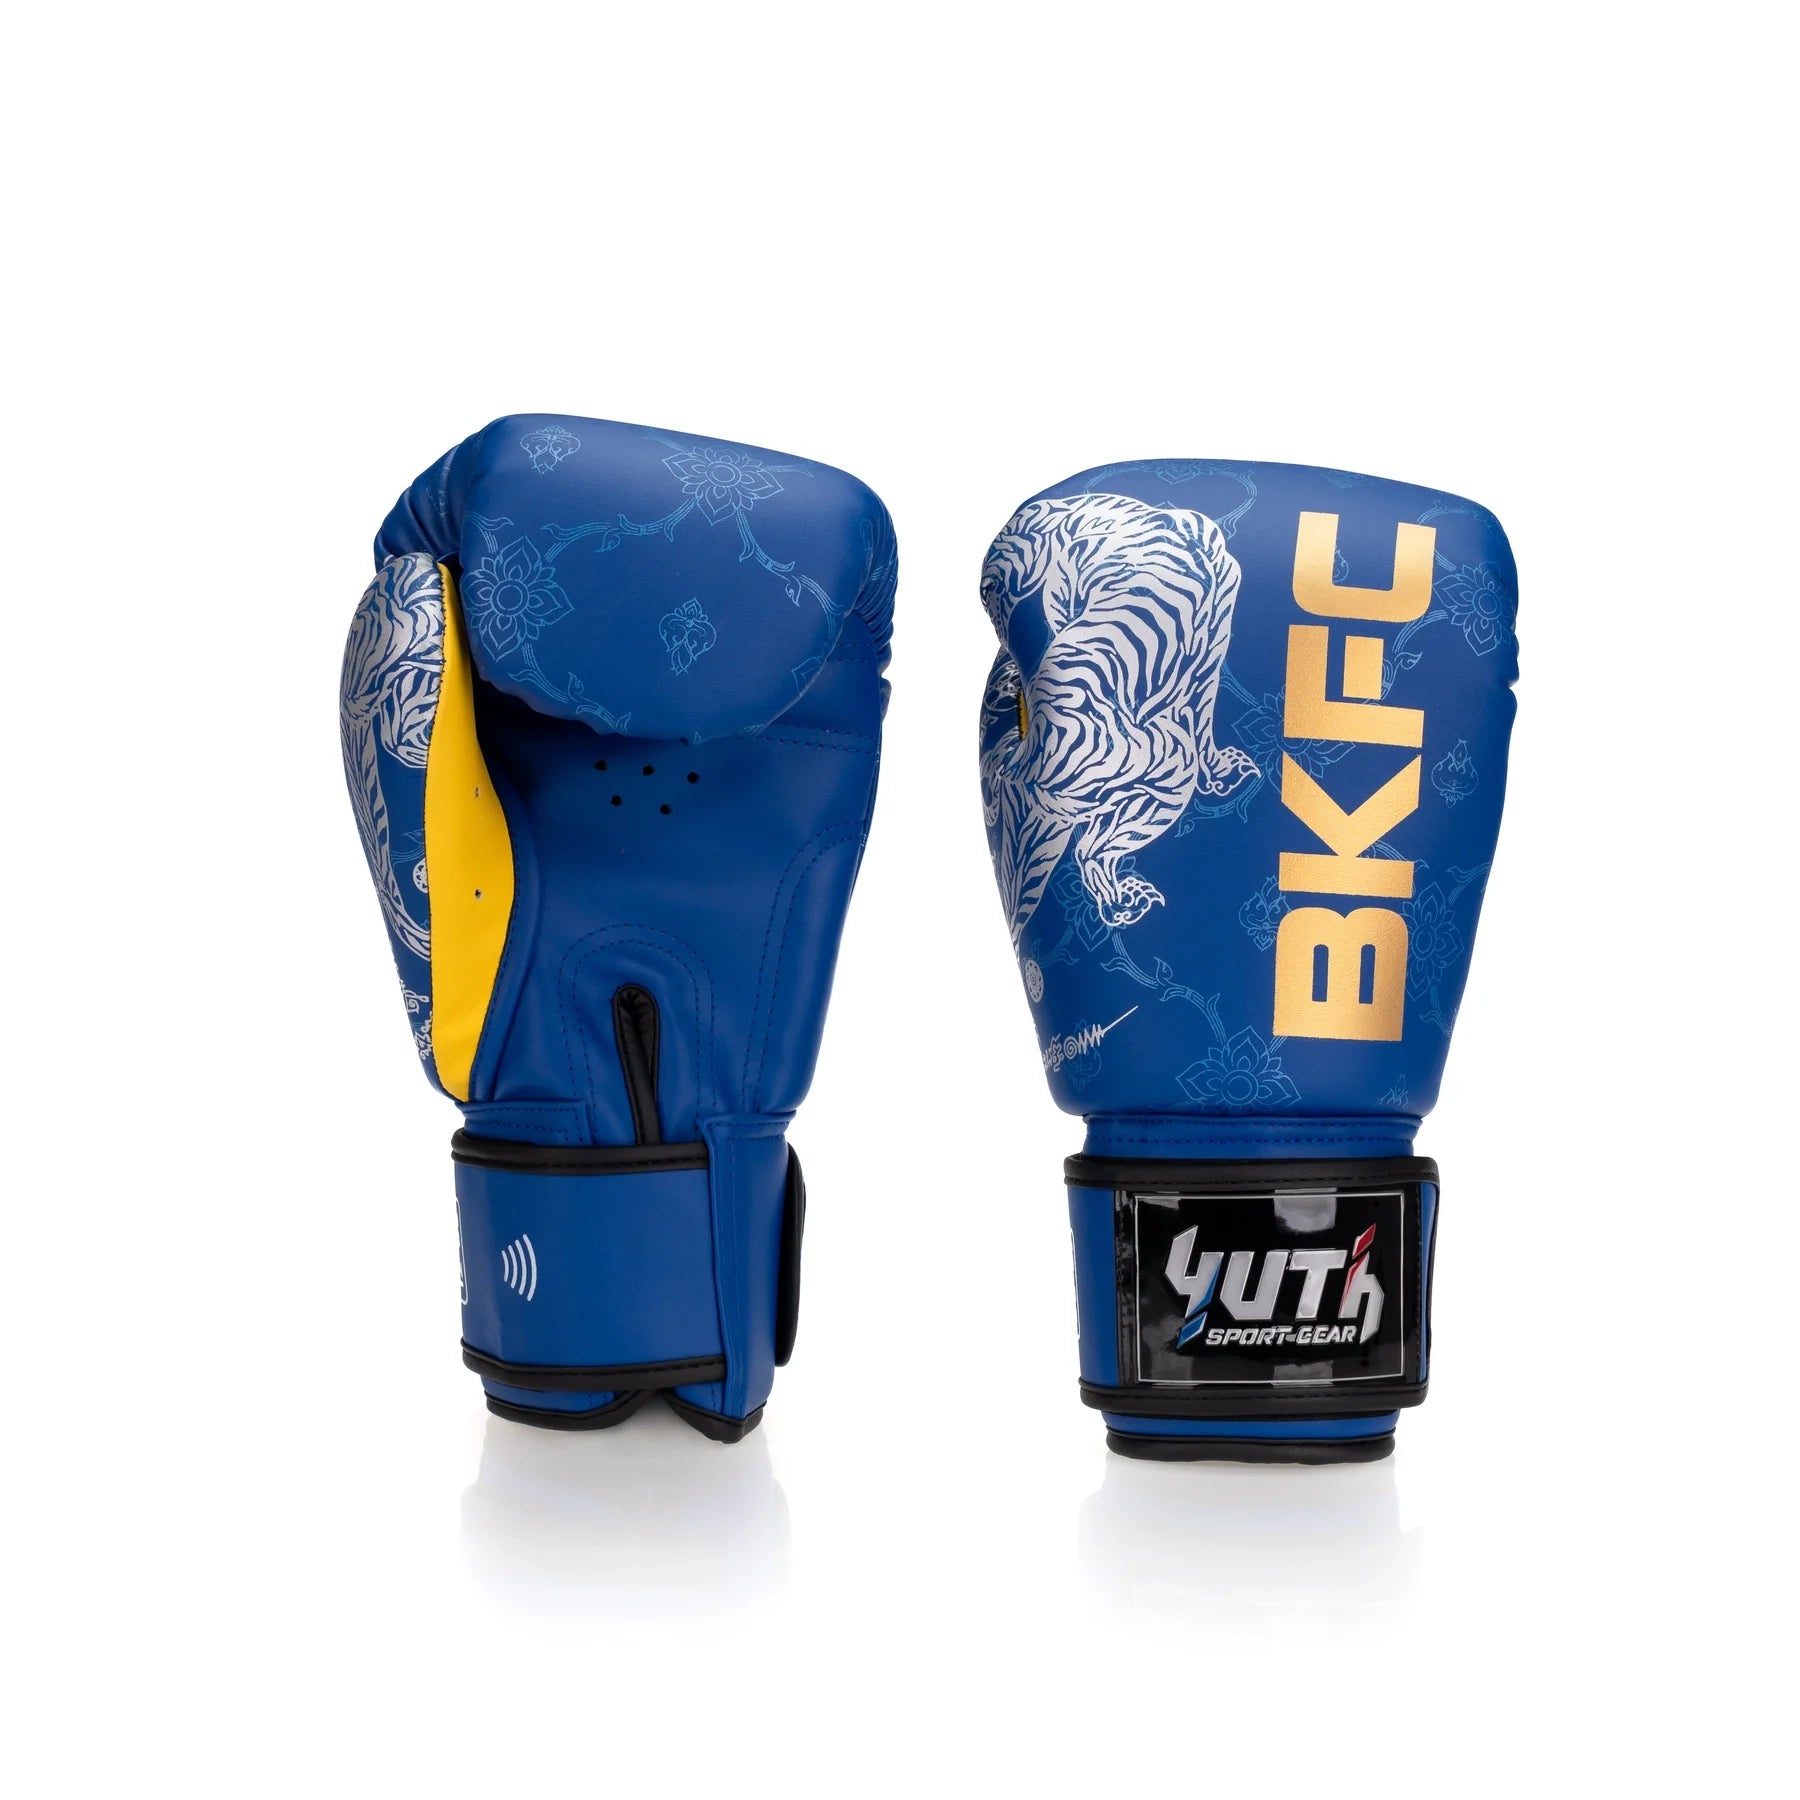 Yuth X BKFC Boxing Gloves - Fight.ShopBoxing GlovesBKFCBlue8oz